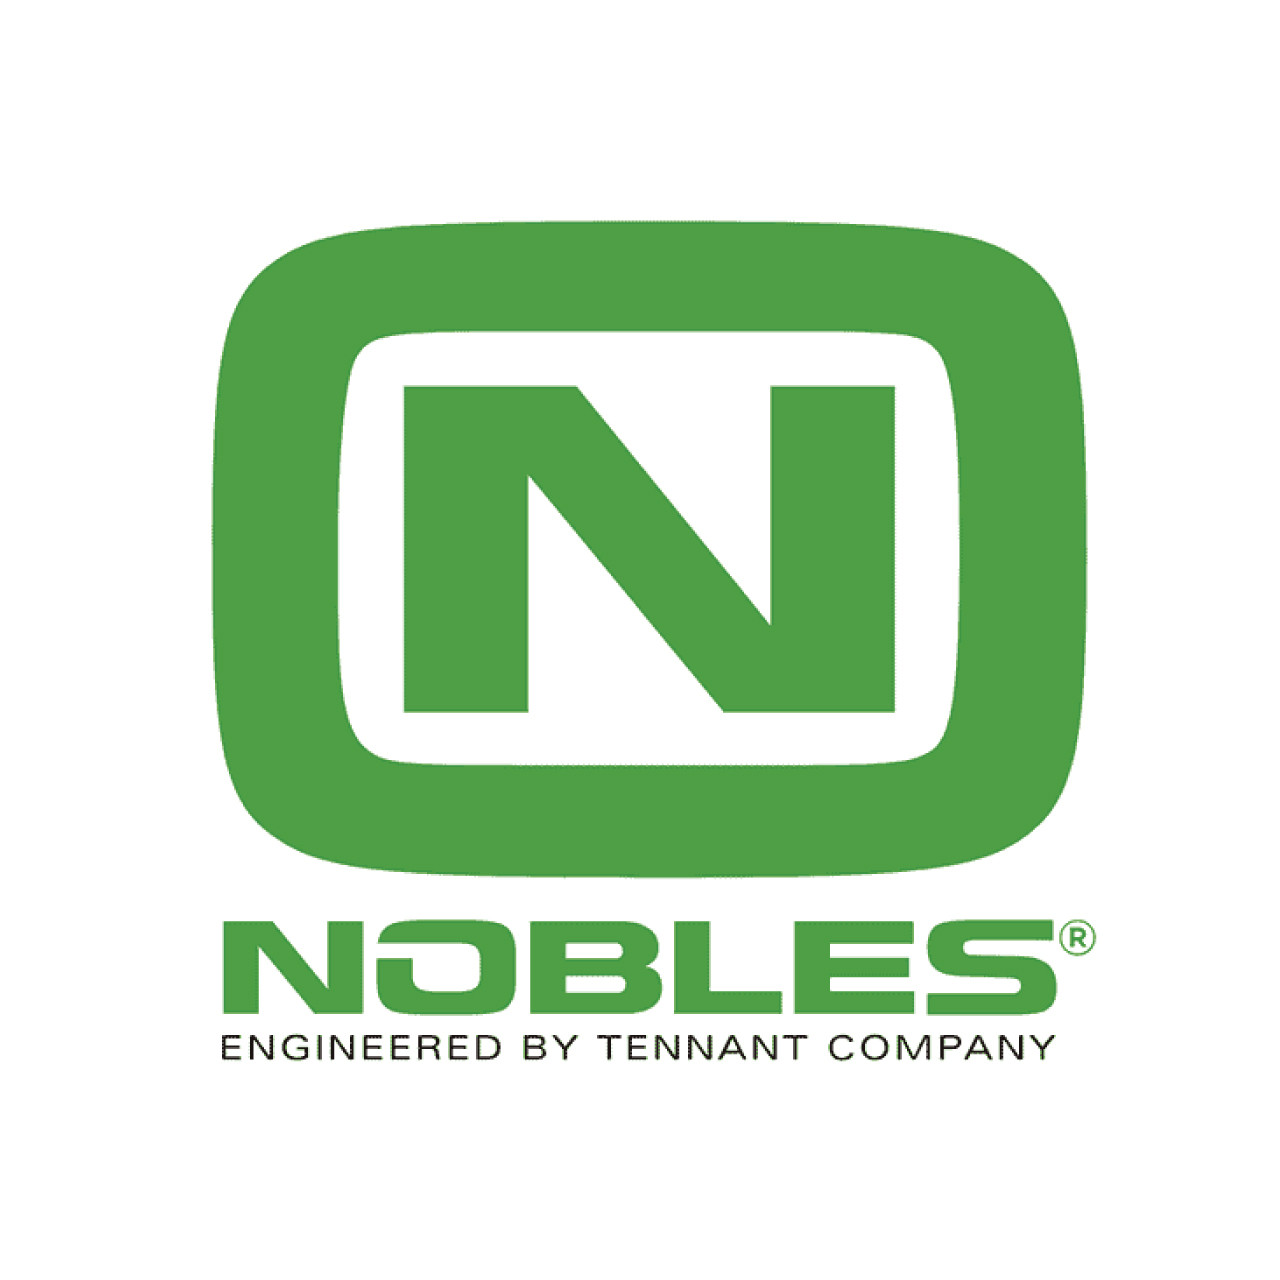 Nobles 1077105 - LABEL, LOGO, 5.75 [Nobles] SBGRN picture